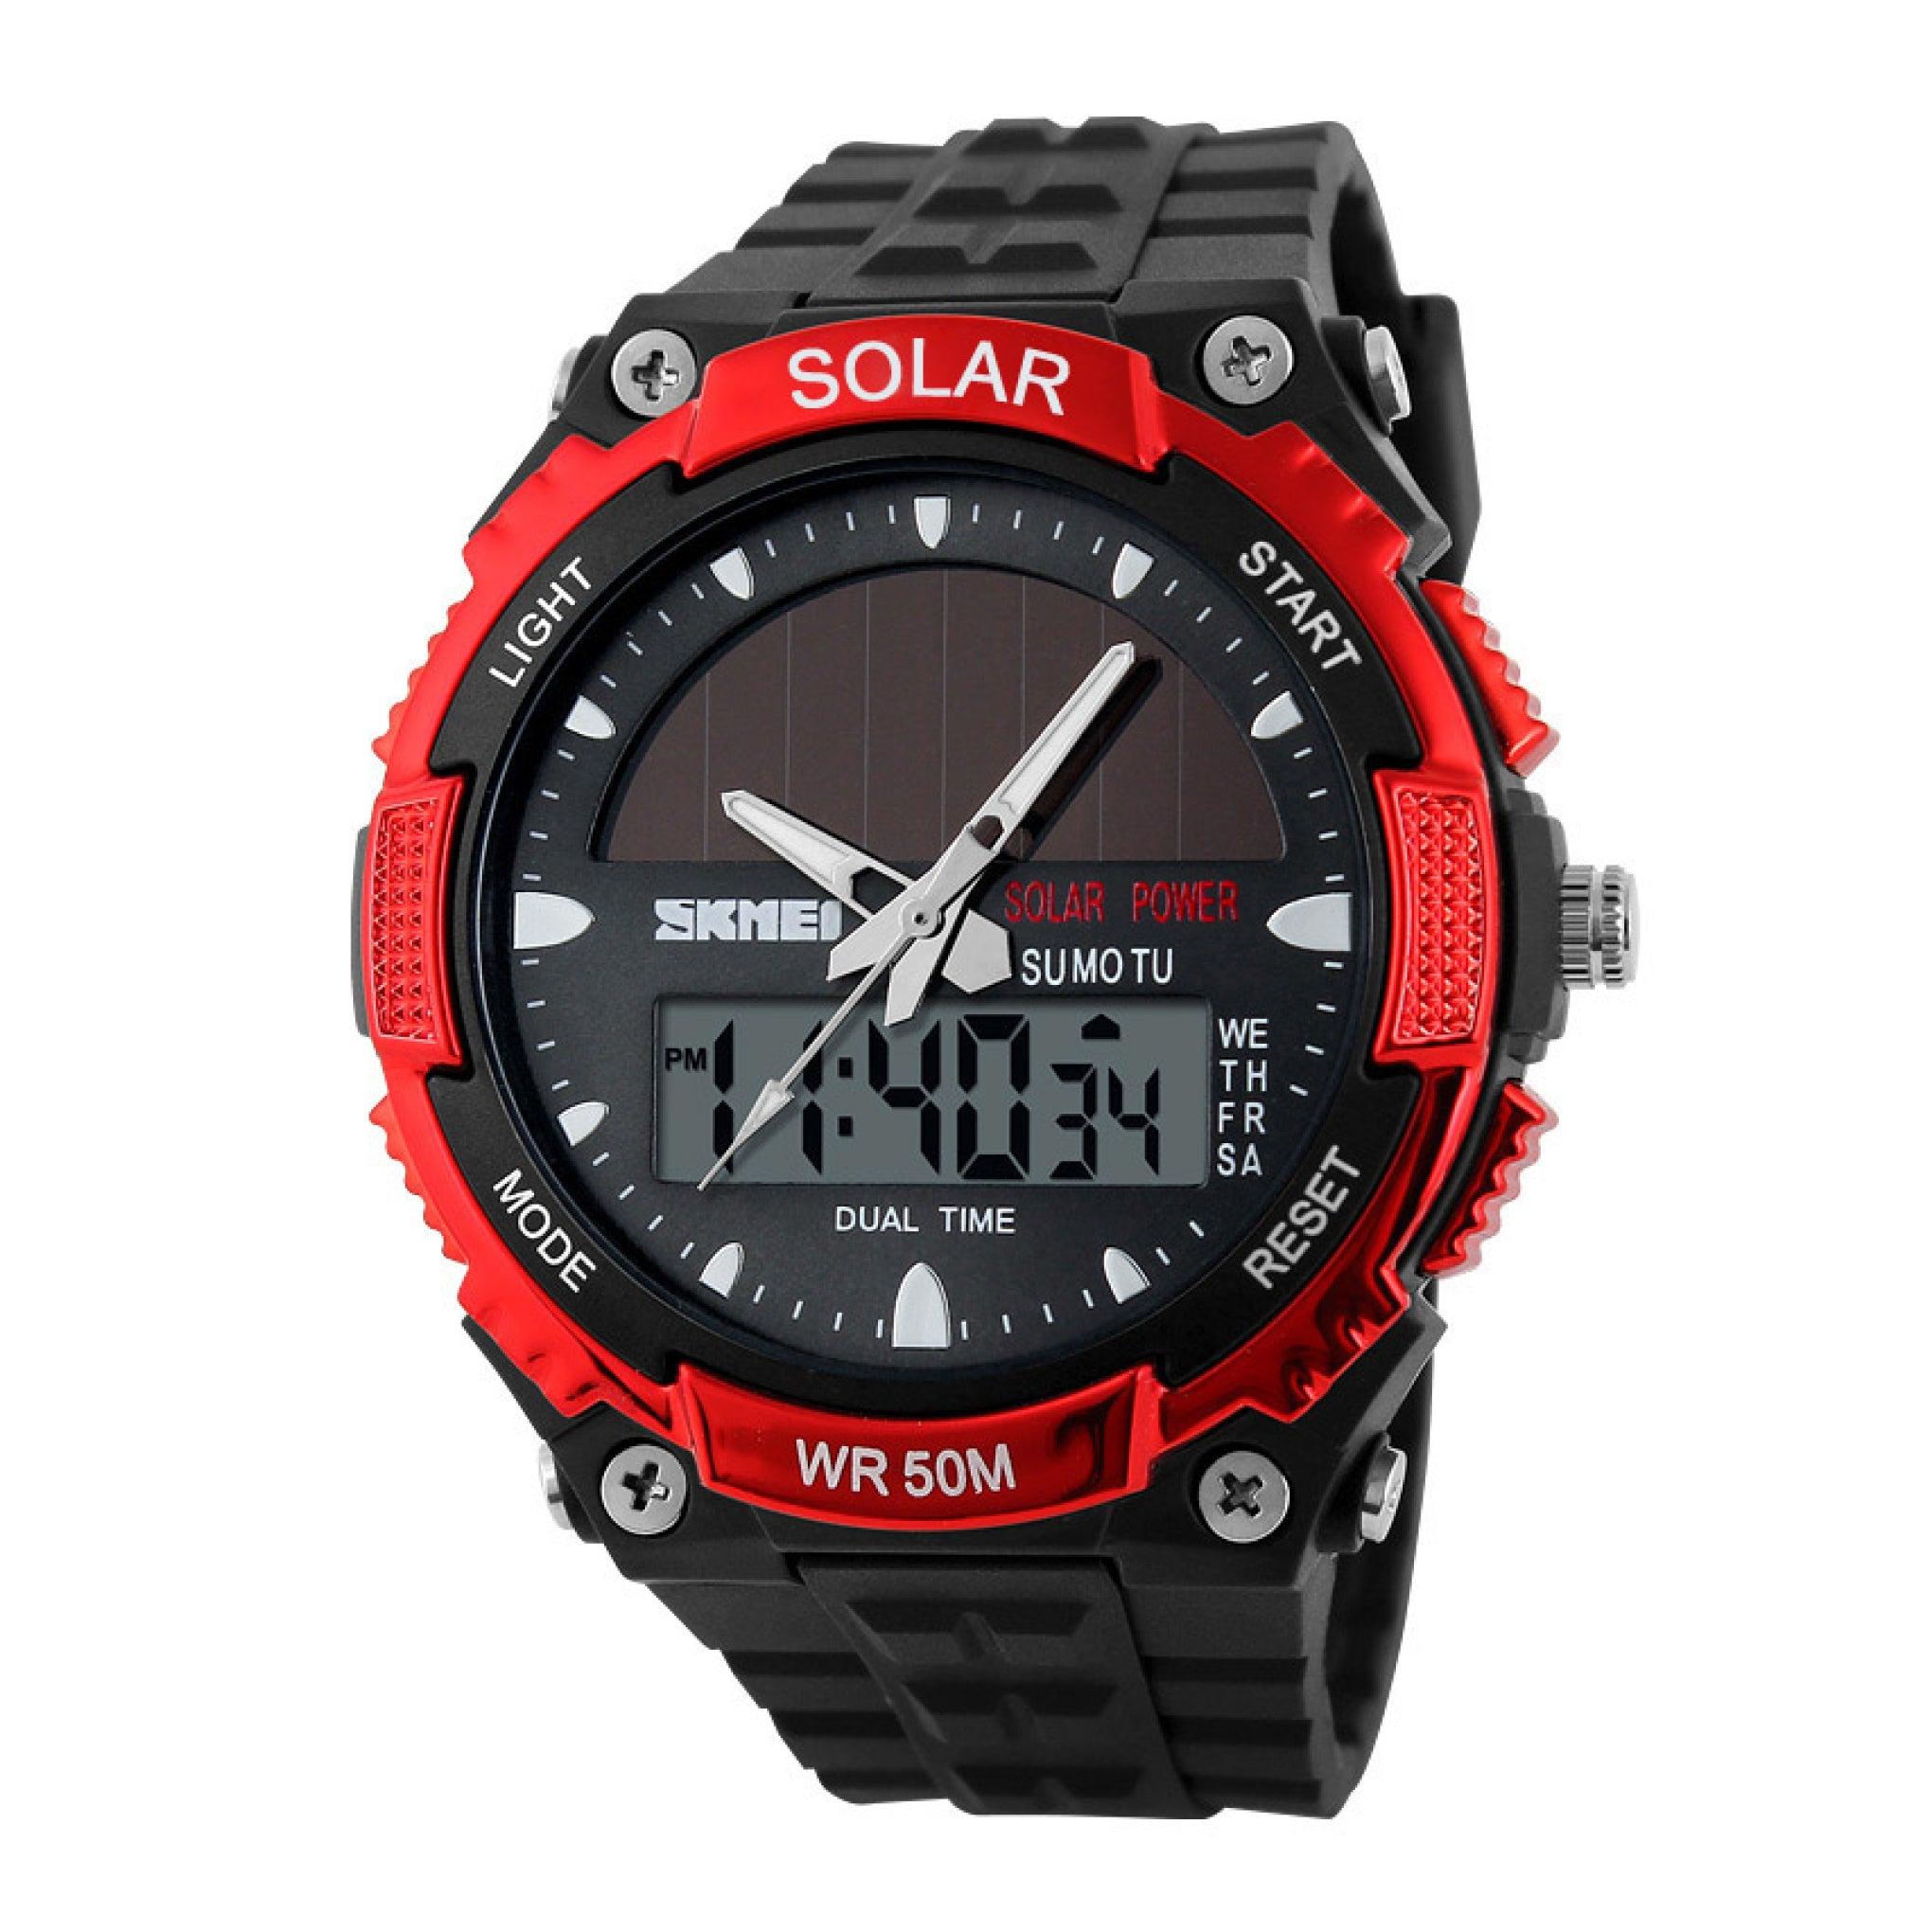 Skmei Men's Solar Power Led Analogue Digital Alarm Sport Red Watch 1049